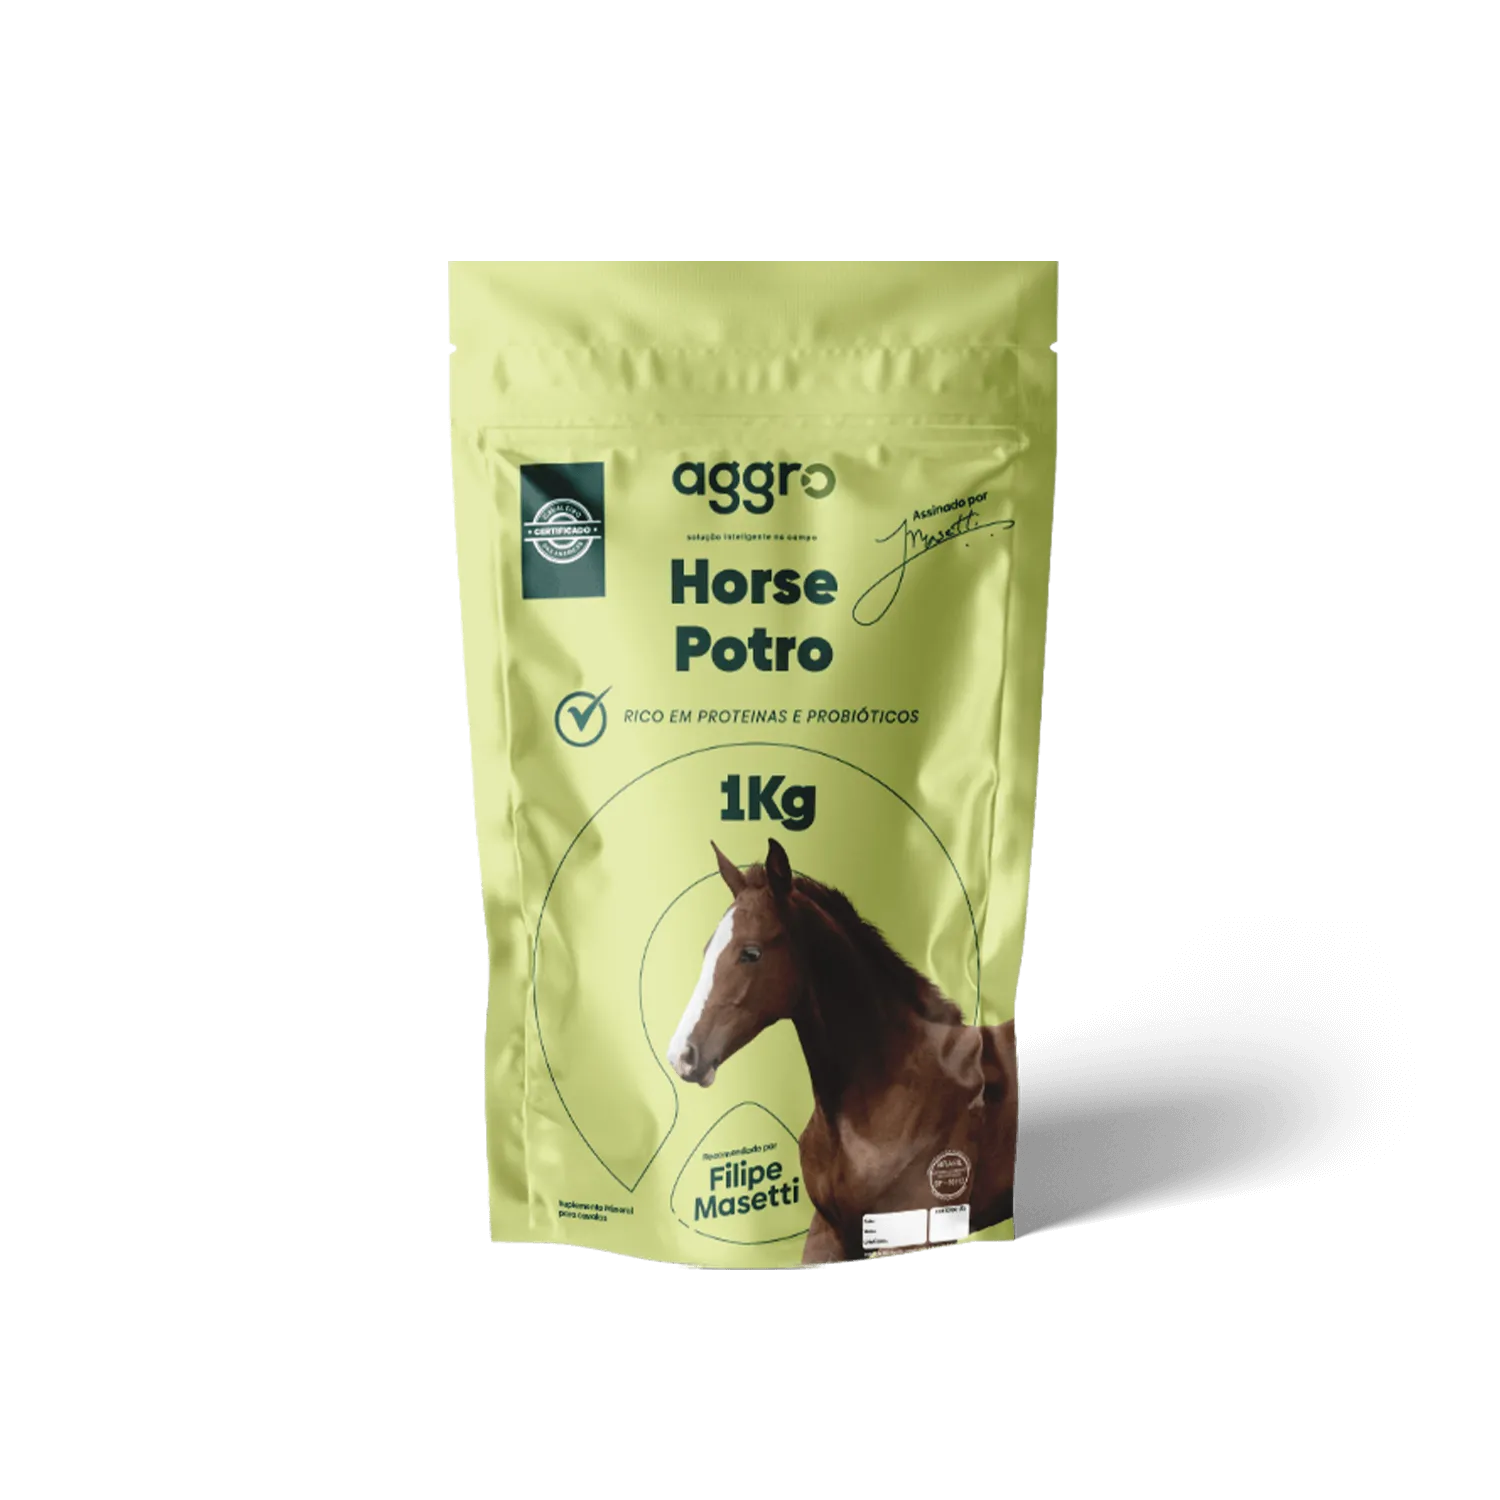 Aggro Horse Potro – 1kg